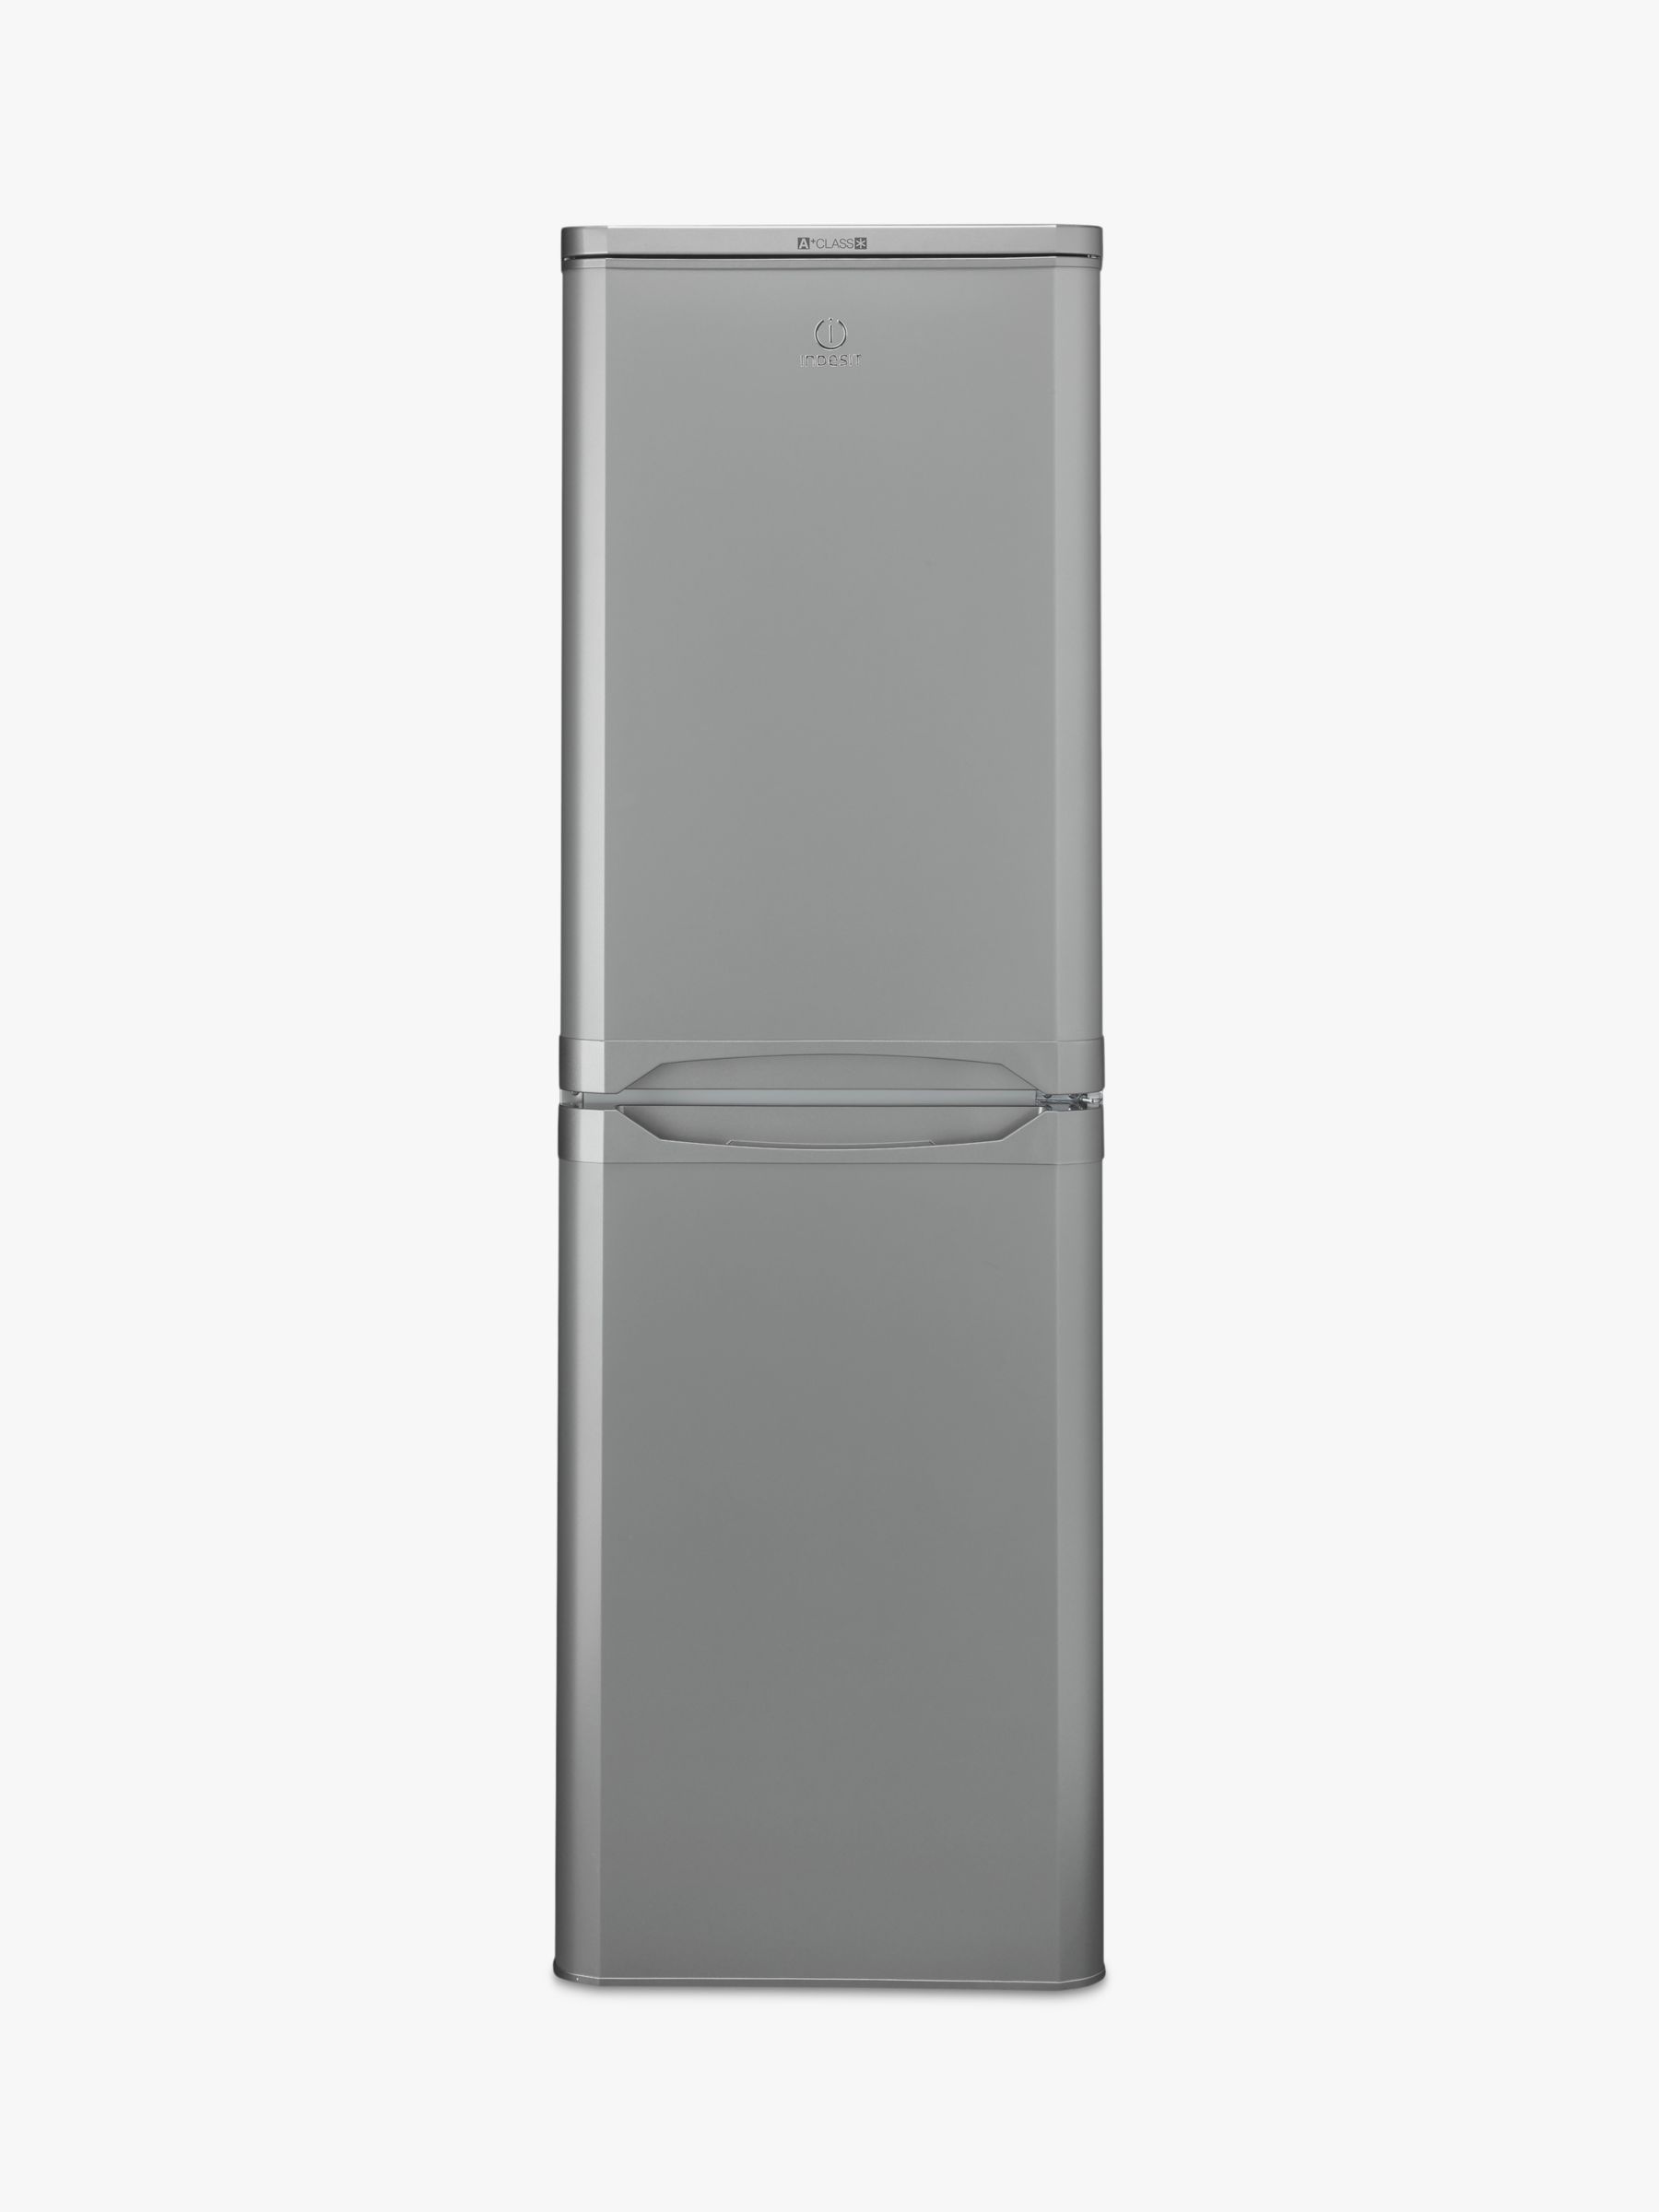 Indesit IBD5517S Freestanding Fridge Freezer, A+ Energy Rating, 55cm Wide, Silver